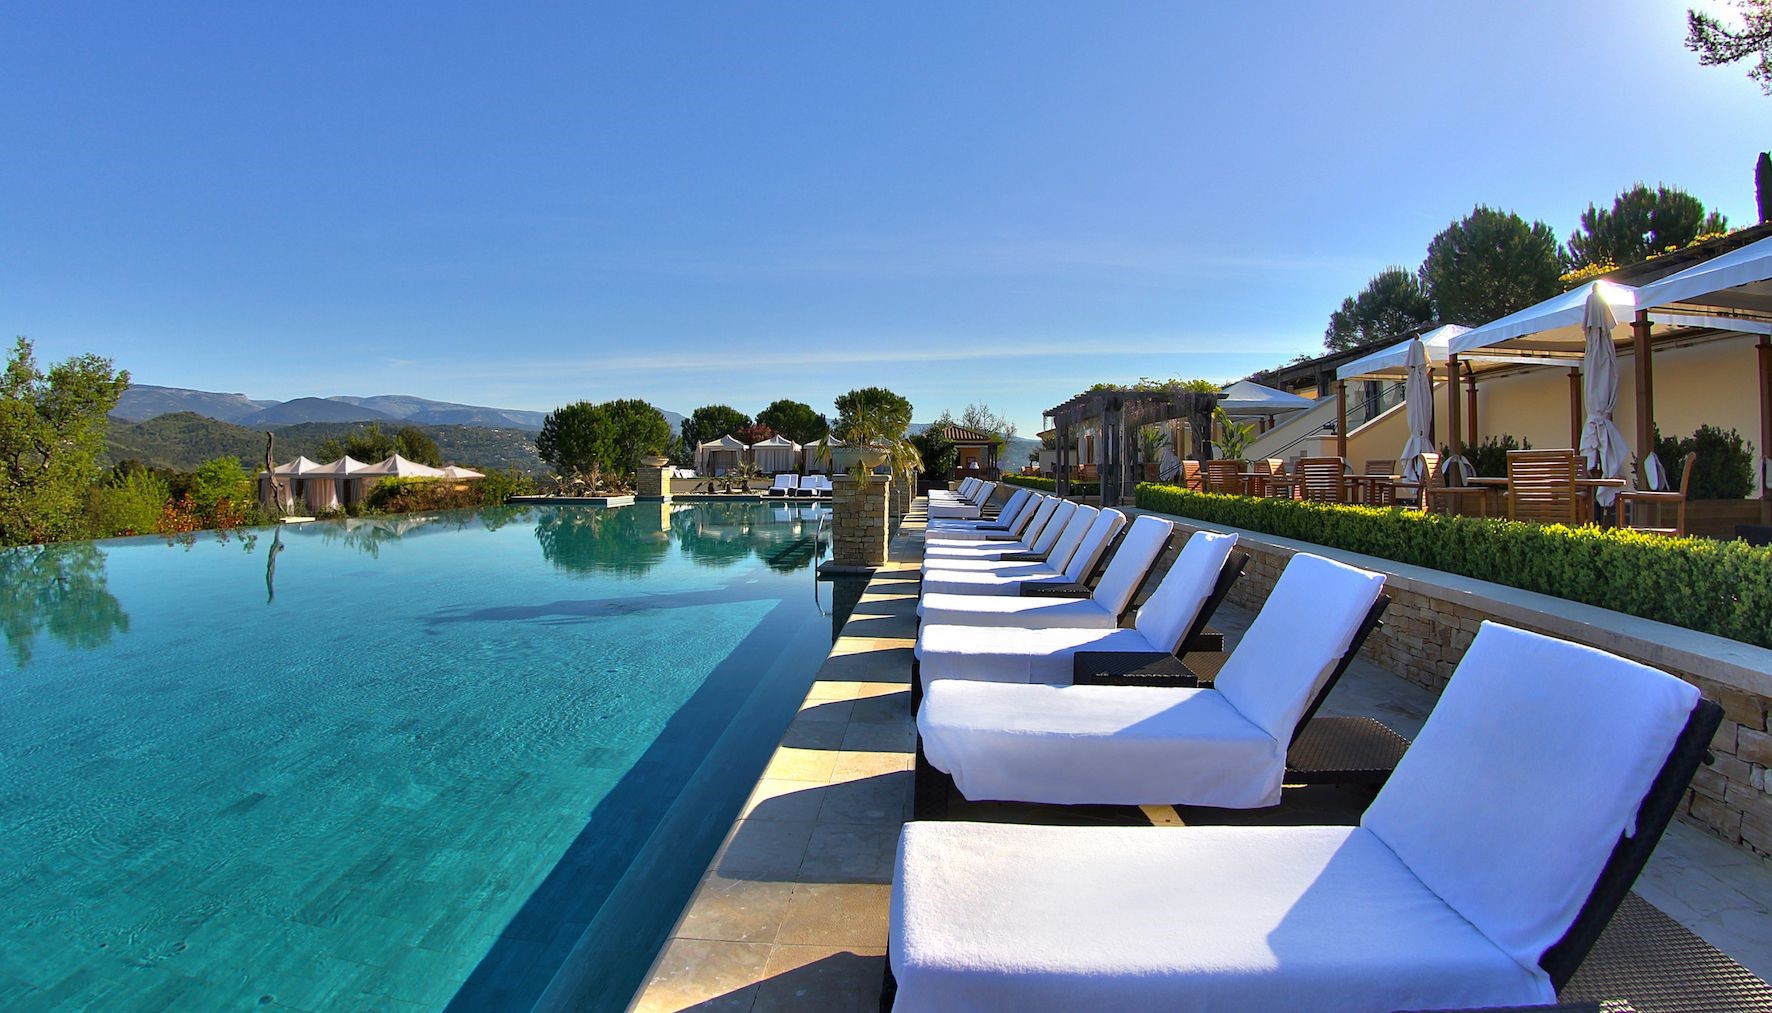 Sydfrankrig, Frankrig, Terre Blanche Hotel Spa Golf Resort